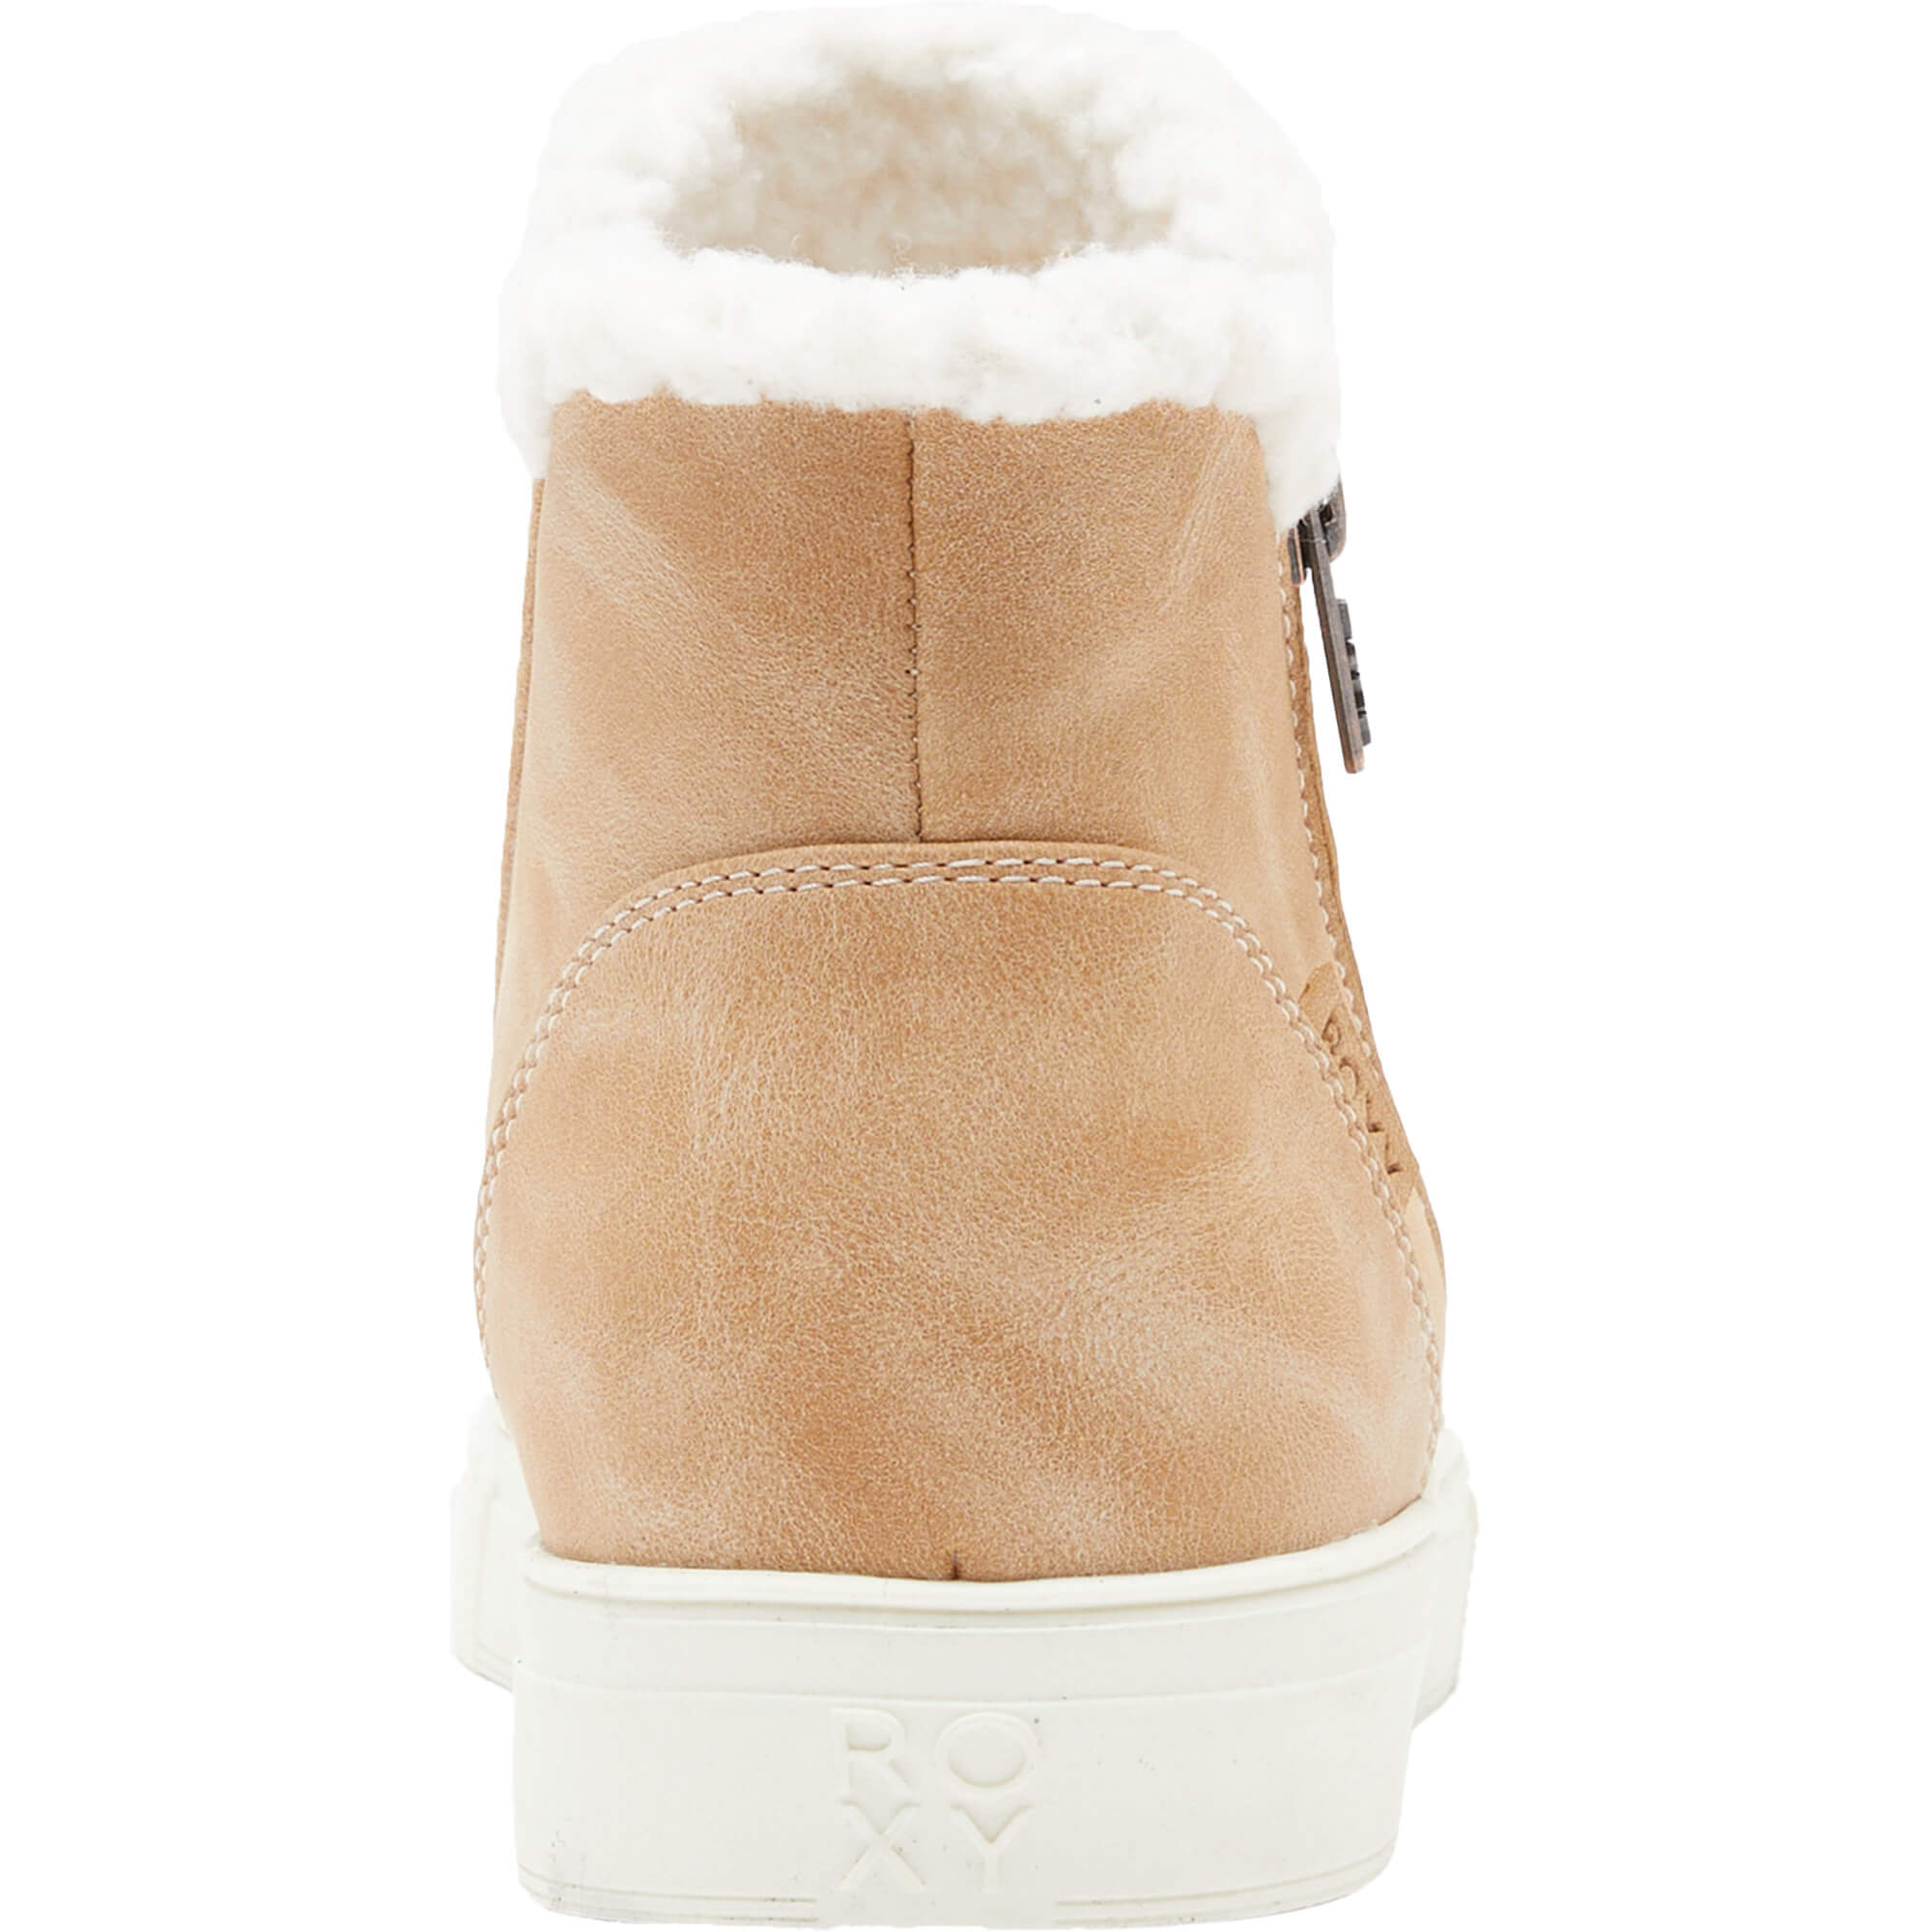 Roxy Theeo Women's Snow/Winter Boots